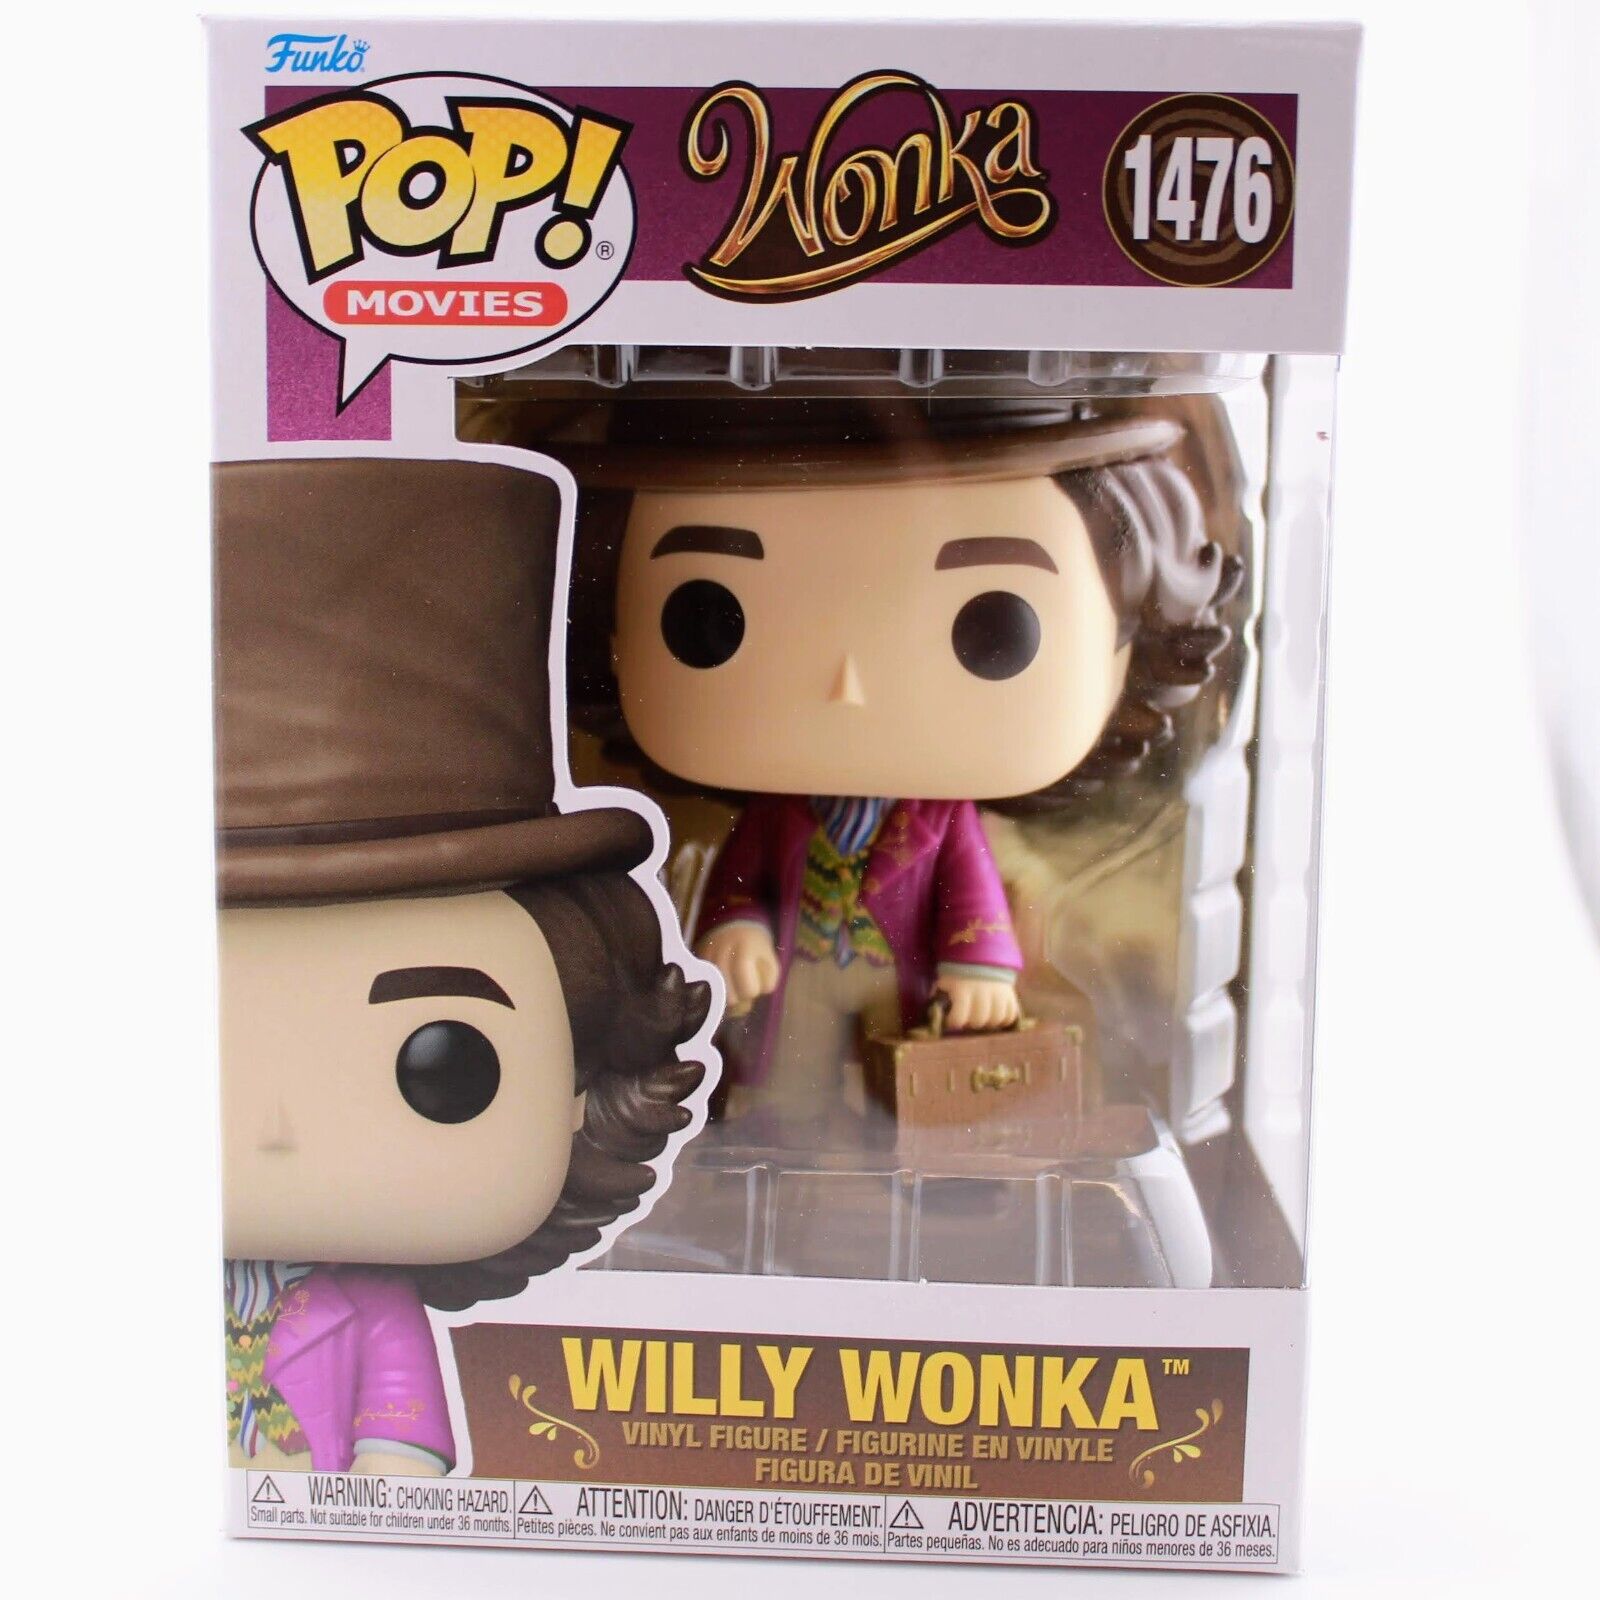 Wonka Willy Wonka Funko Pop! Vinyl Figure #1476